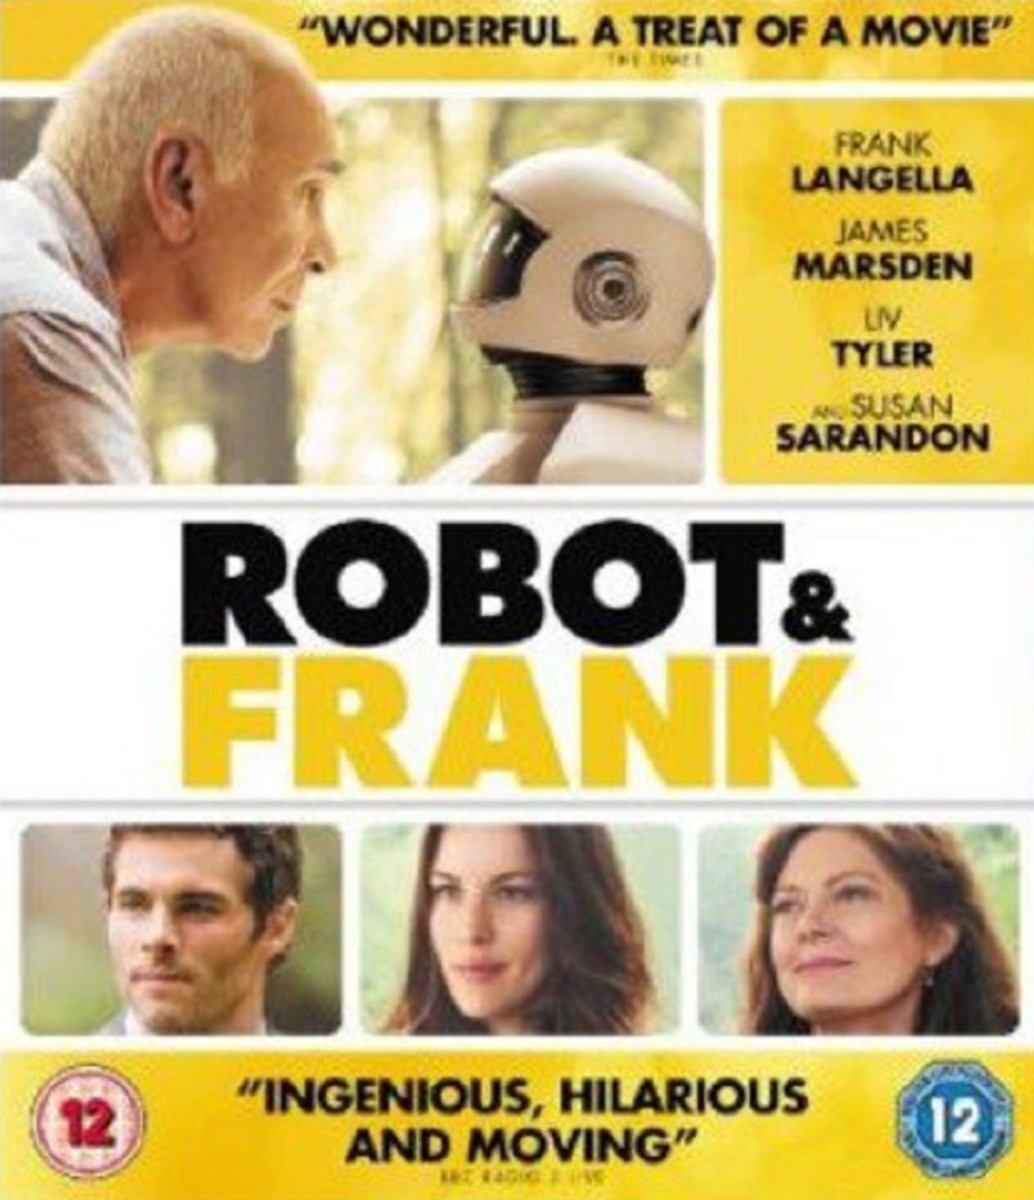 "Robot & Frank"